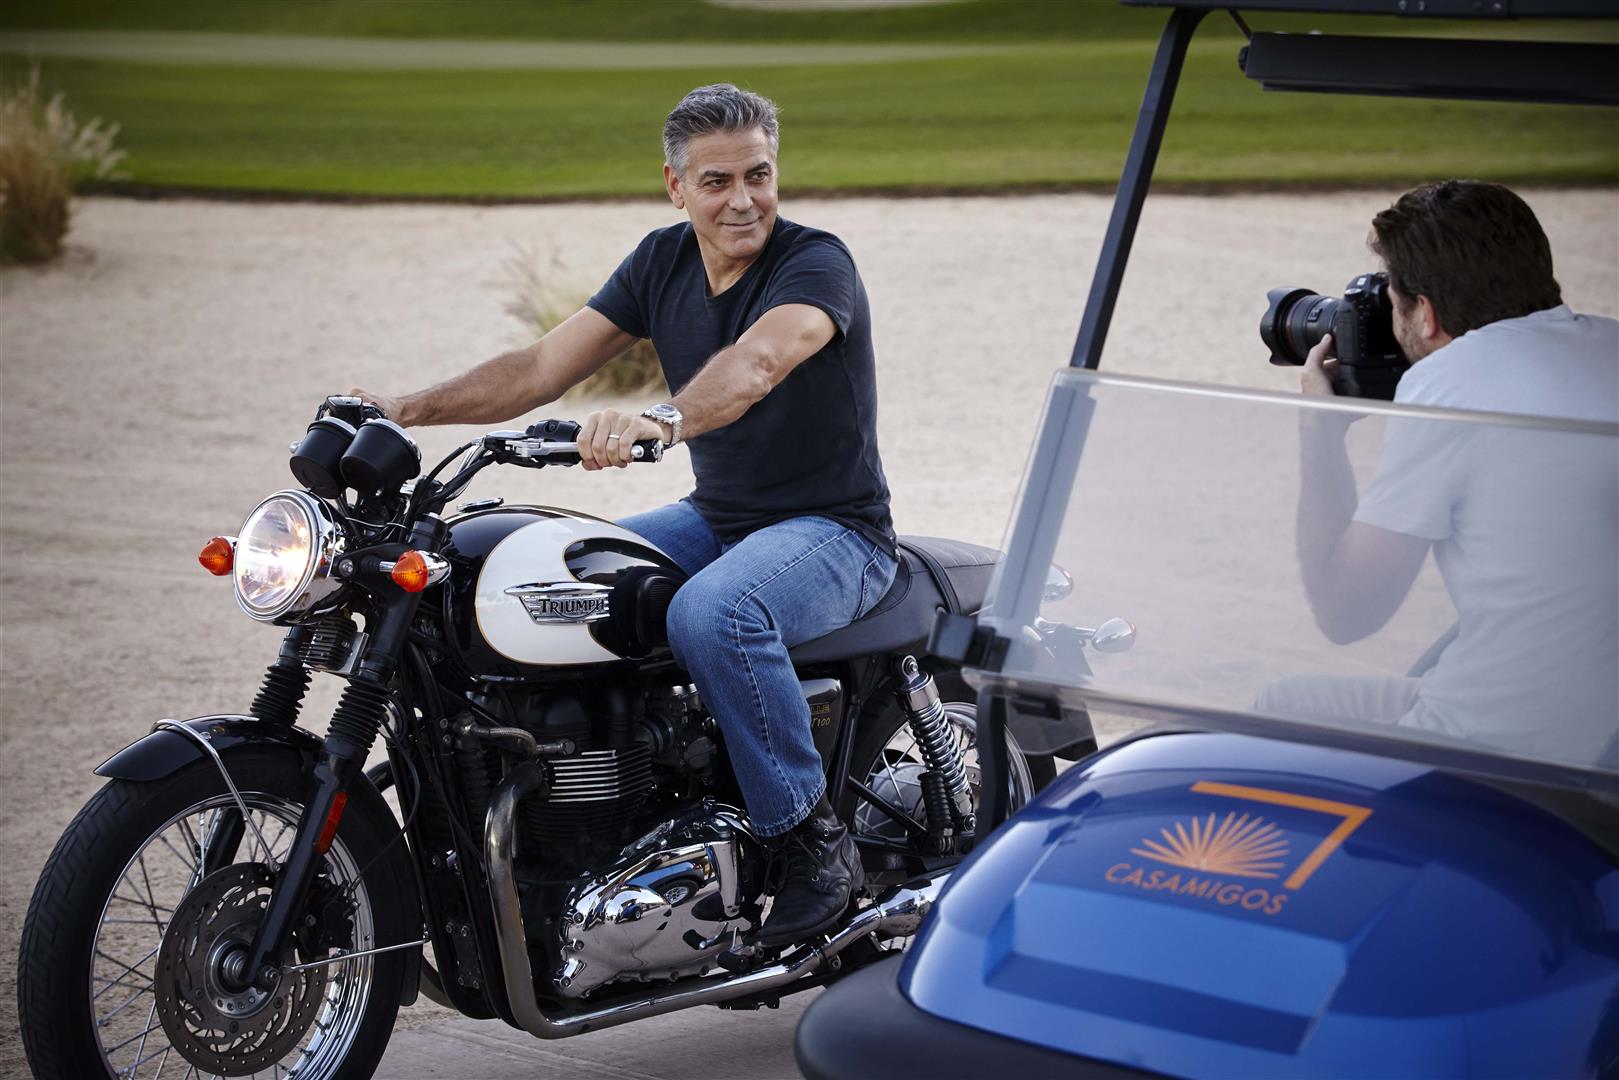 George Clooney Omega